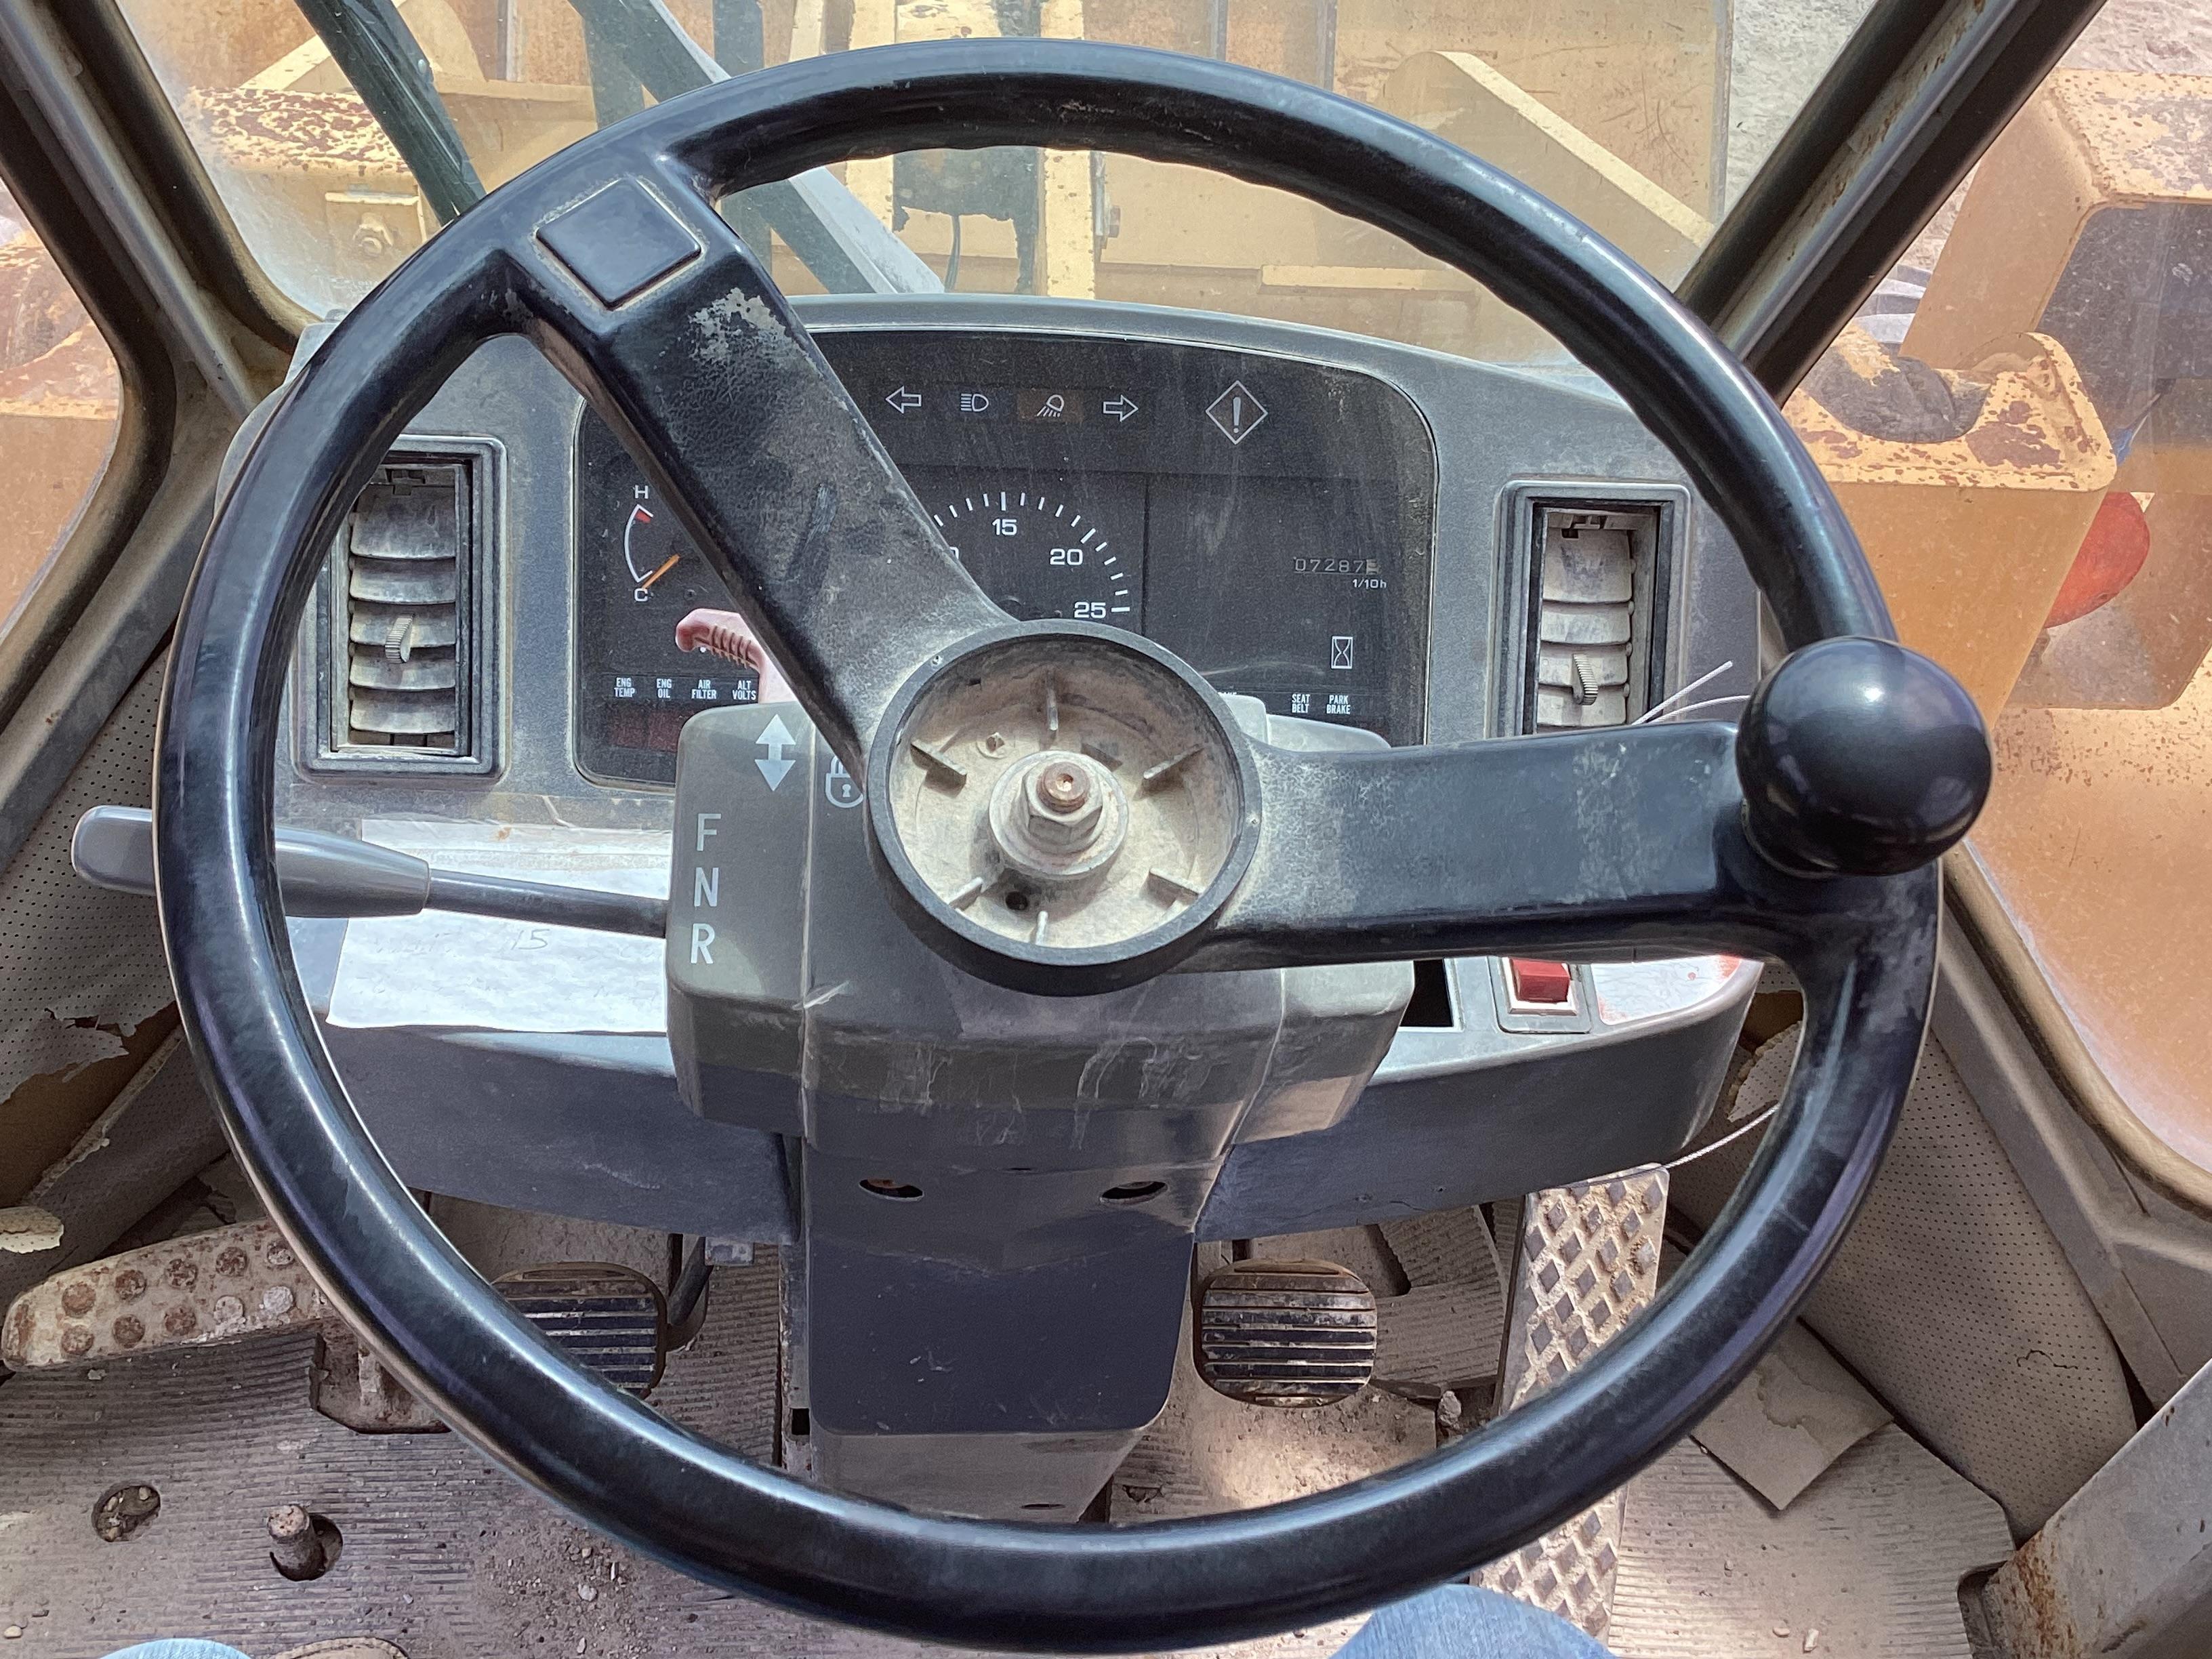 Deere 444G Wheel Loader